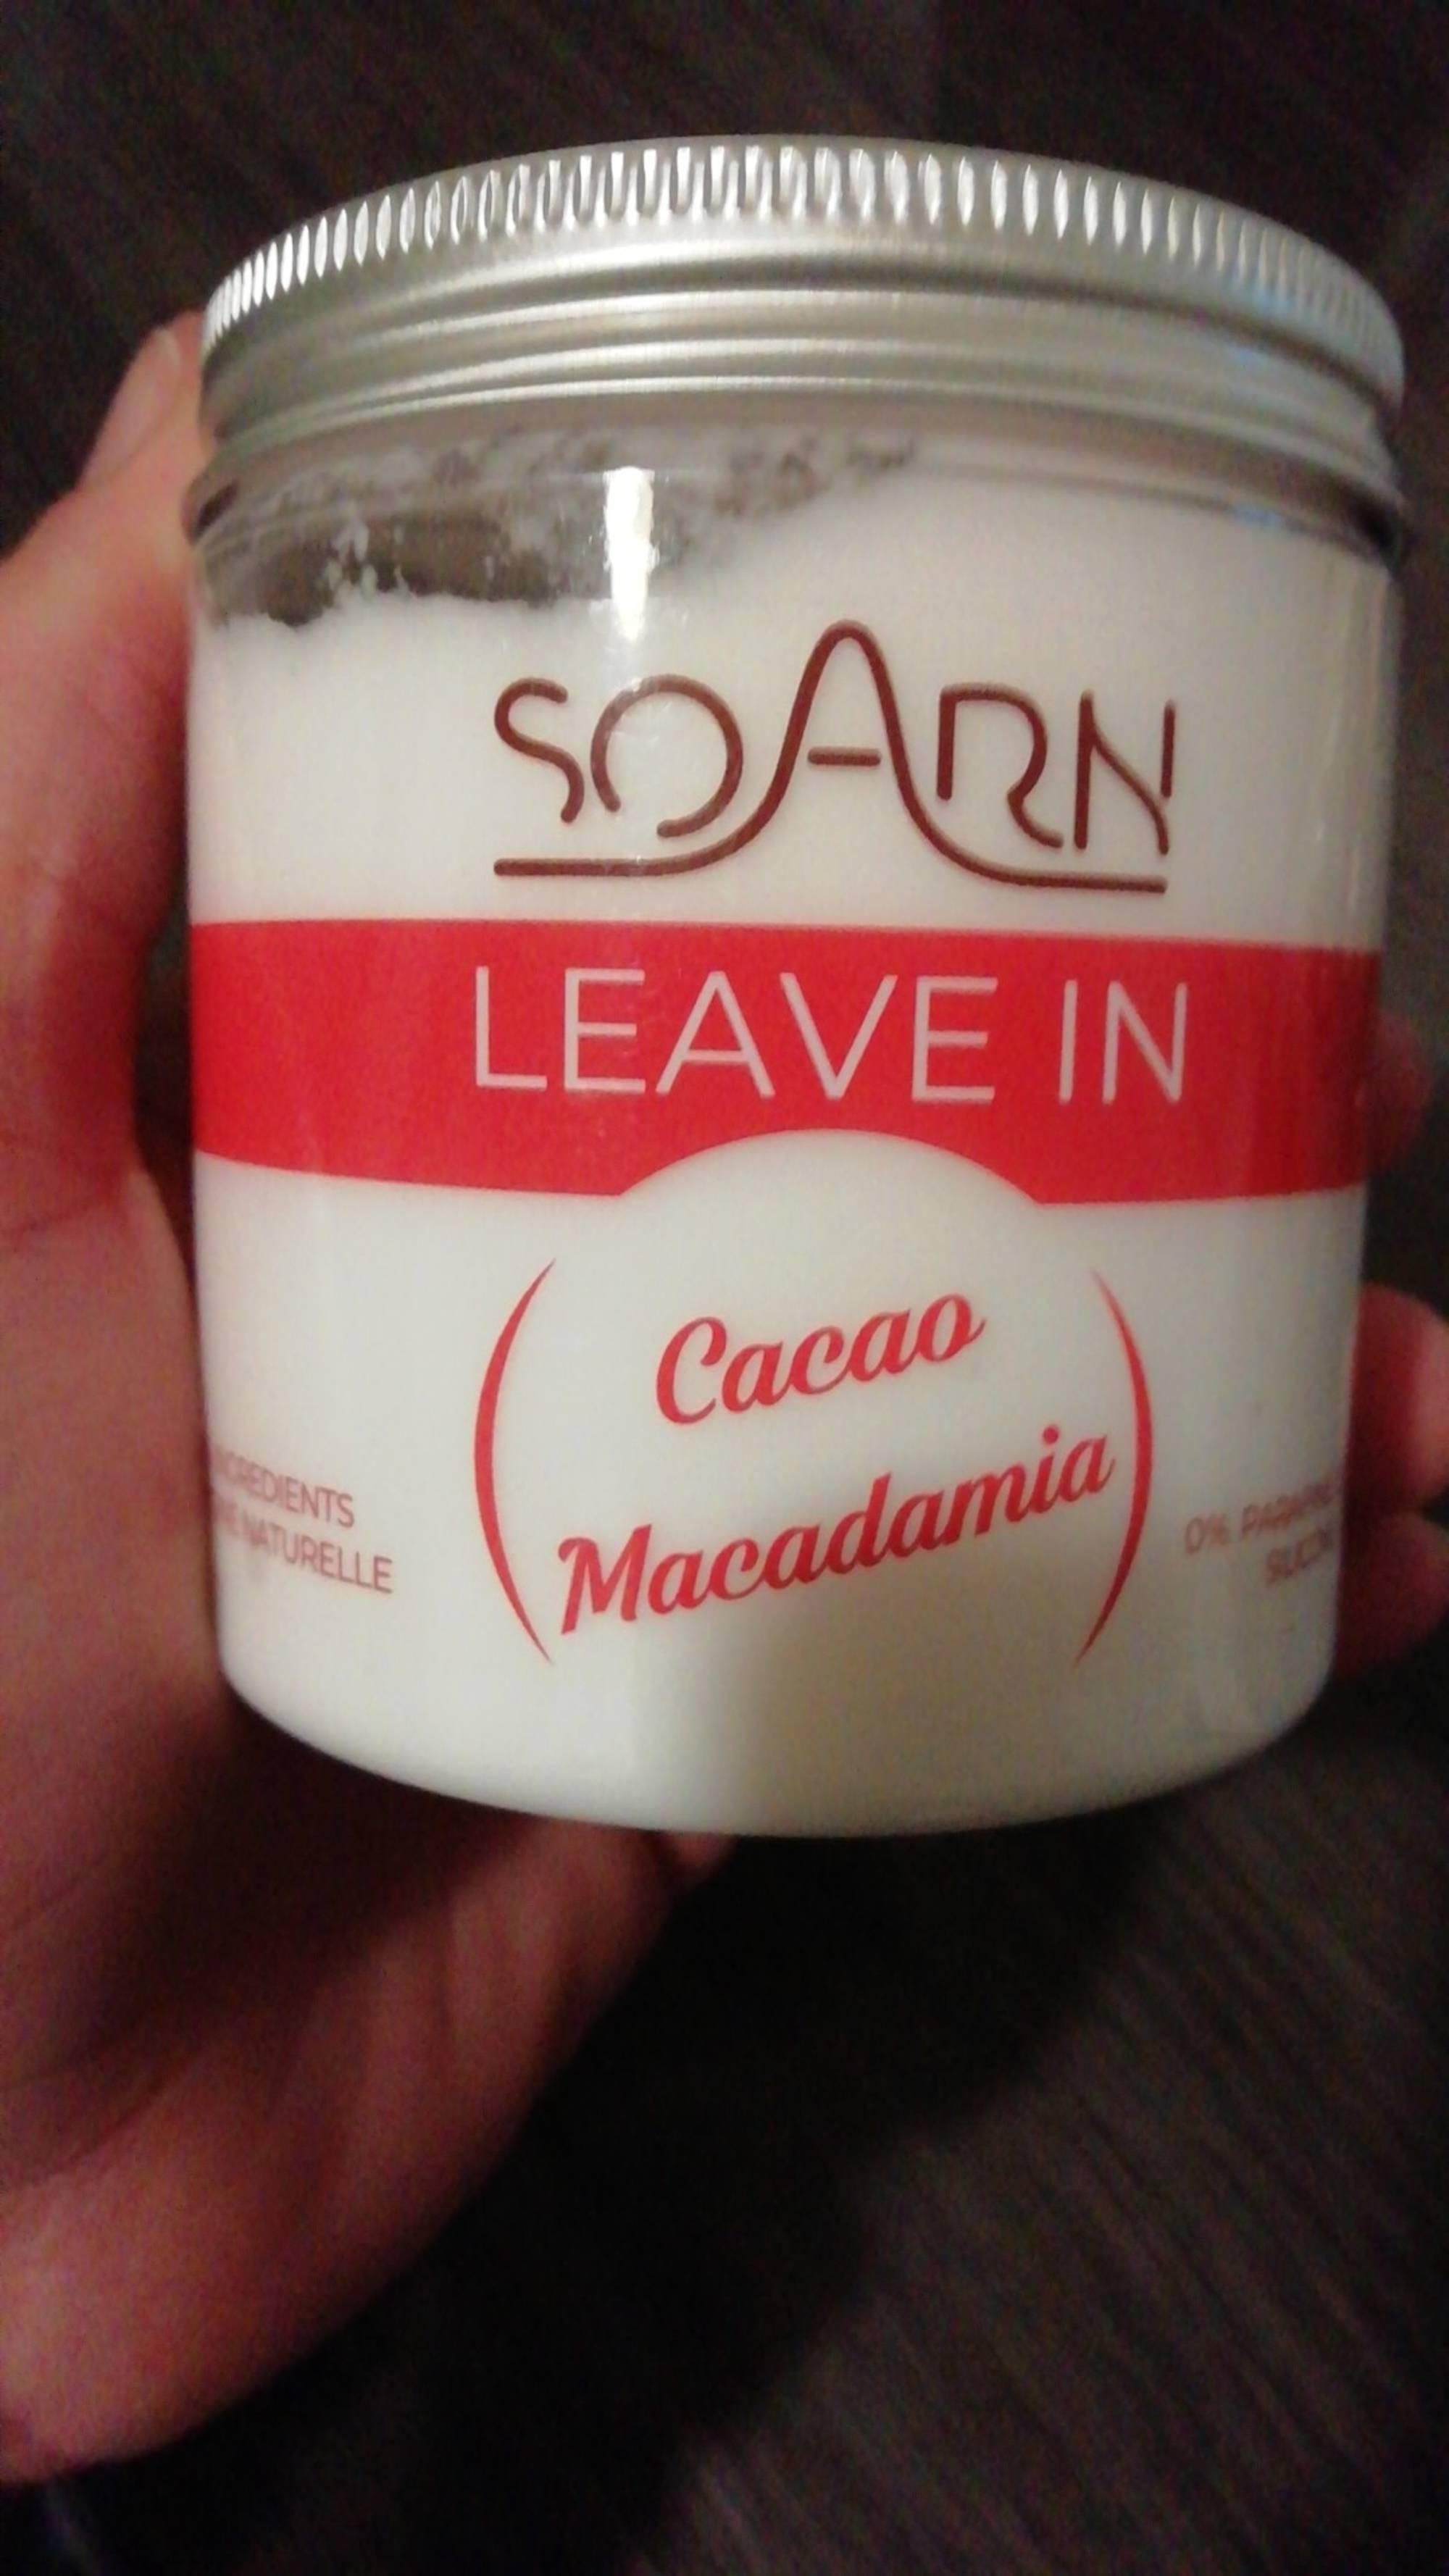 SOARN - Cacao macadamia - Leave in 